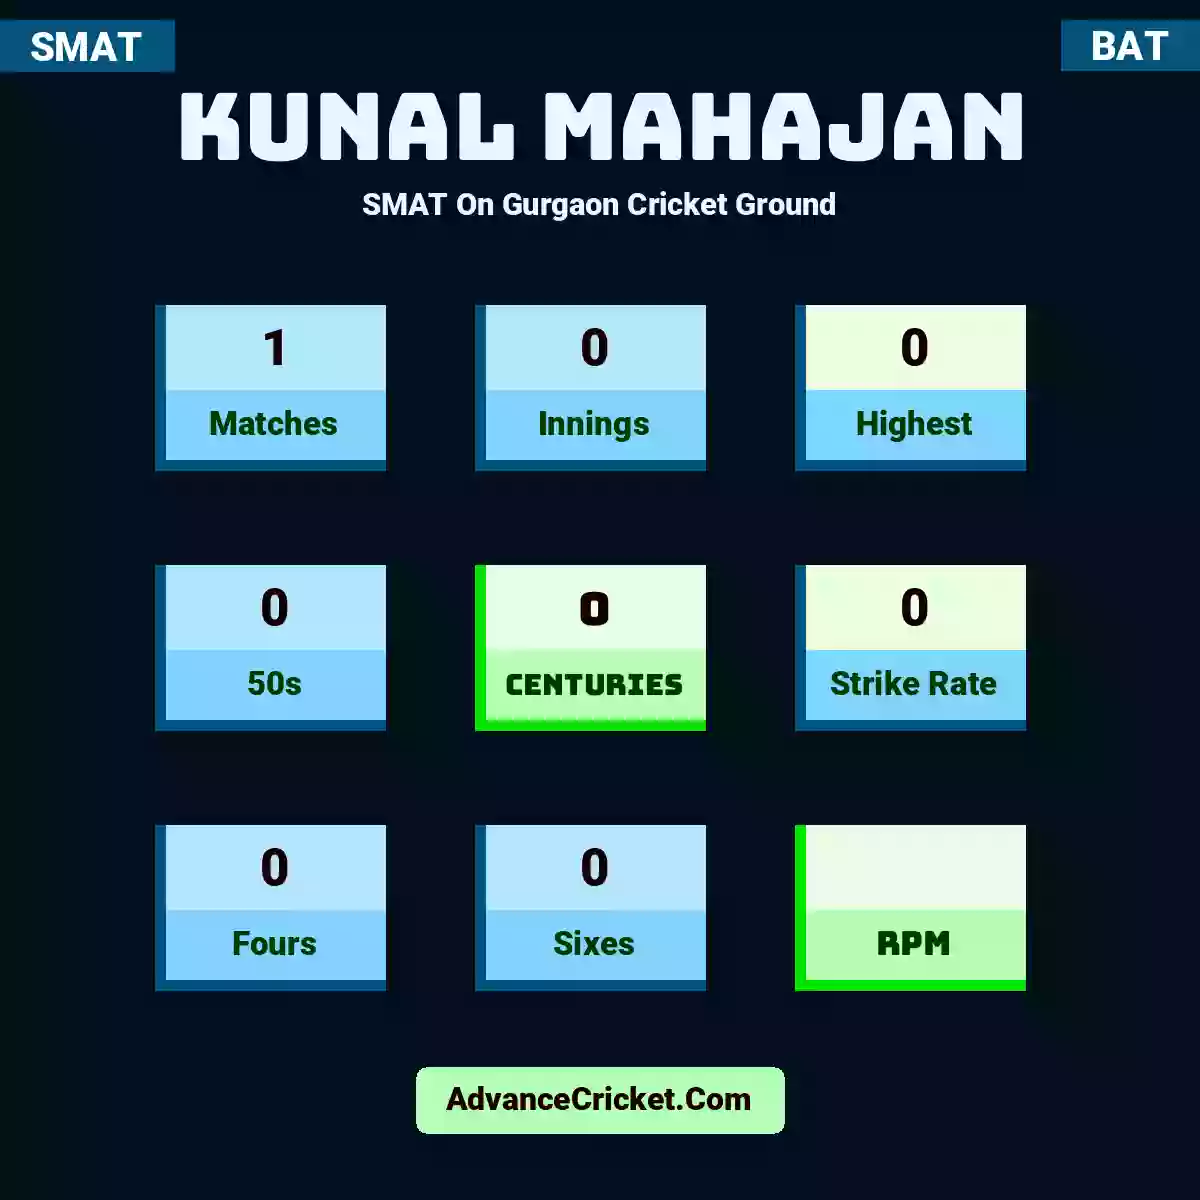 Kunal Mahajan SMAT  On Gurgaon Cricket Ground, Kunal Mahajan played 1 matches, scored 0 runs as highest, 0 half-centuries, and 0 centuries, with a strike rate of 0. K.Mahajan hit 0 fours and 0 sixes.